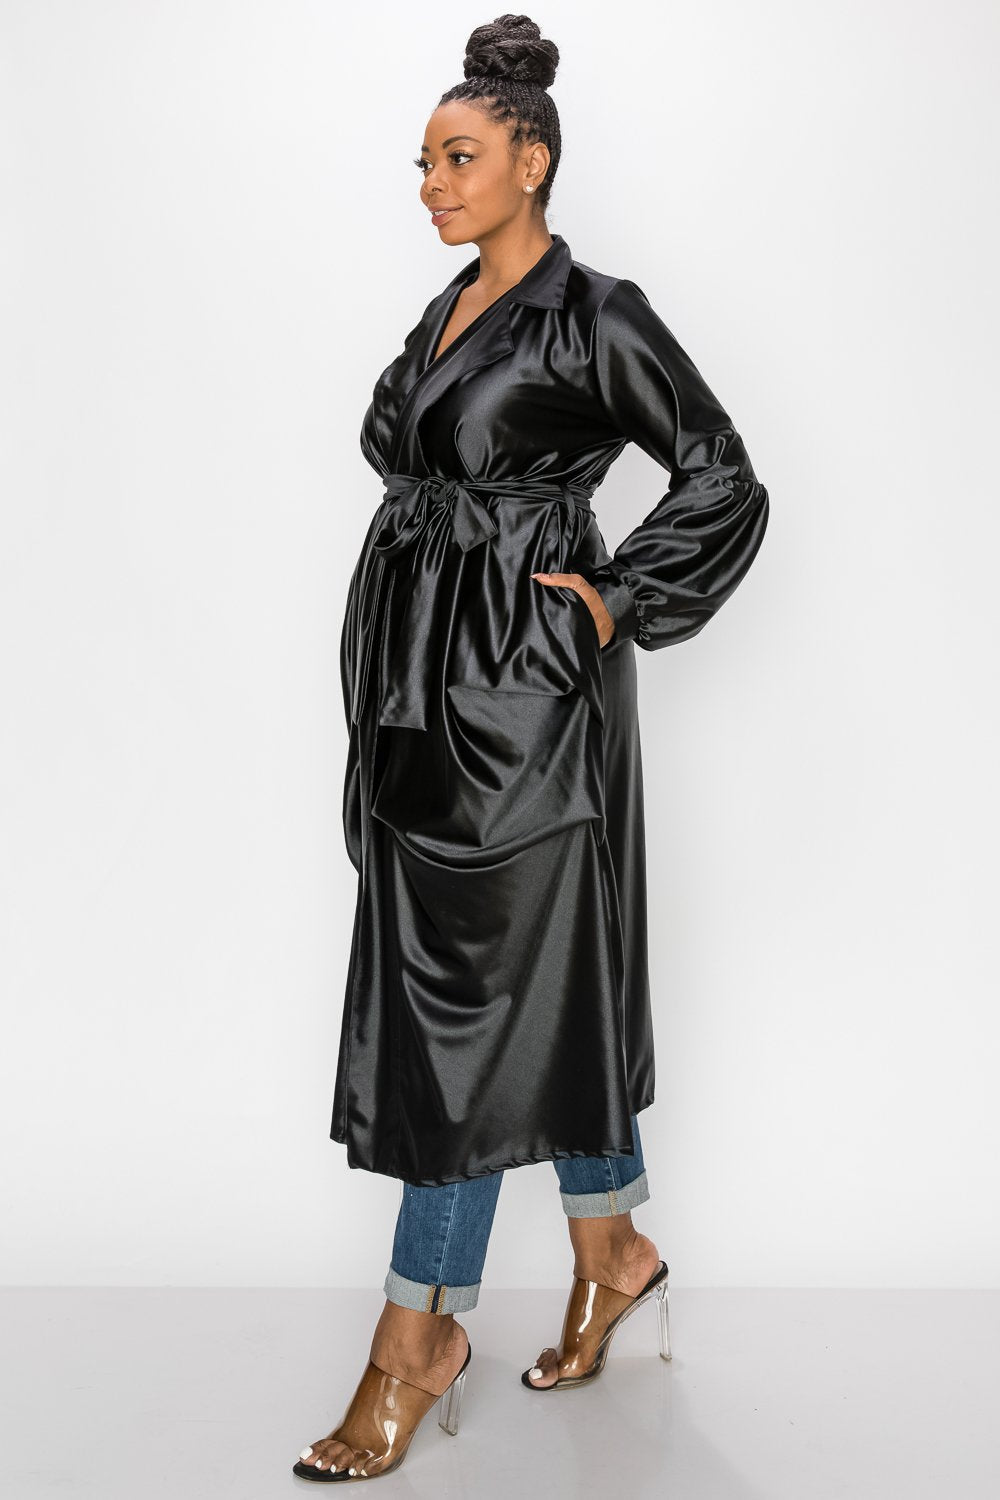 livd L I V D contemporary women's plus size satin coat with belt tie in black